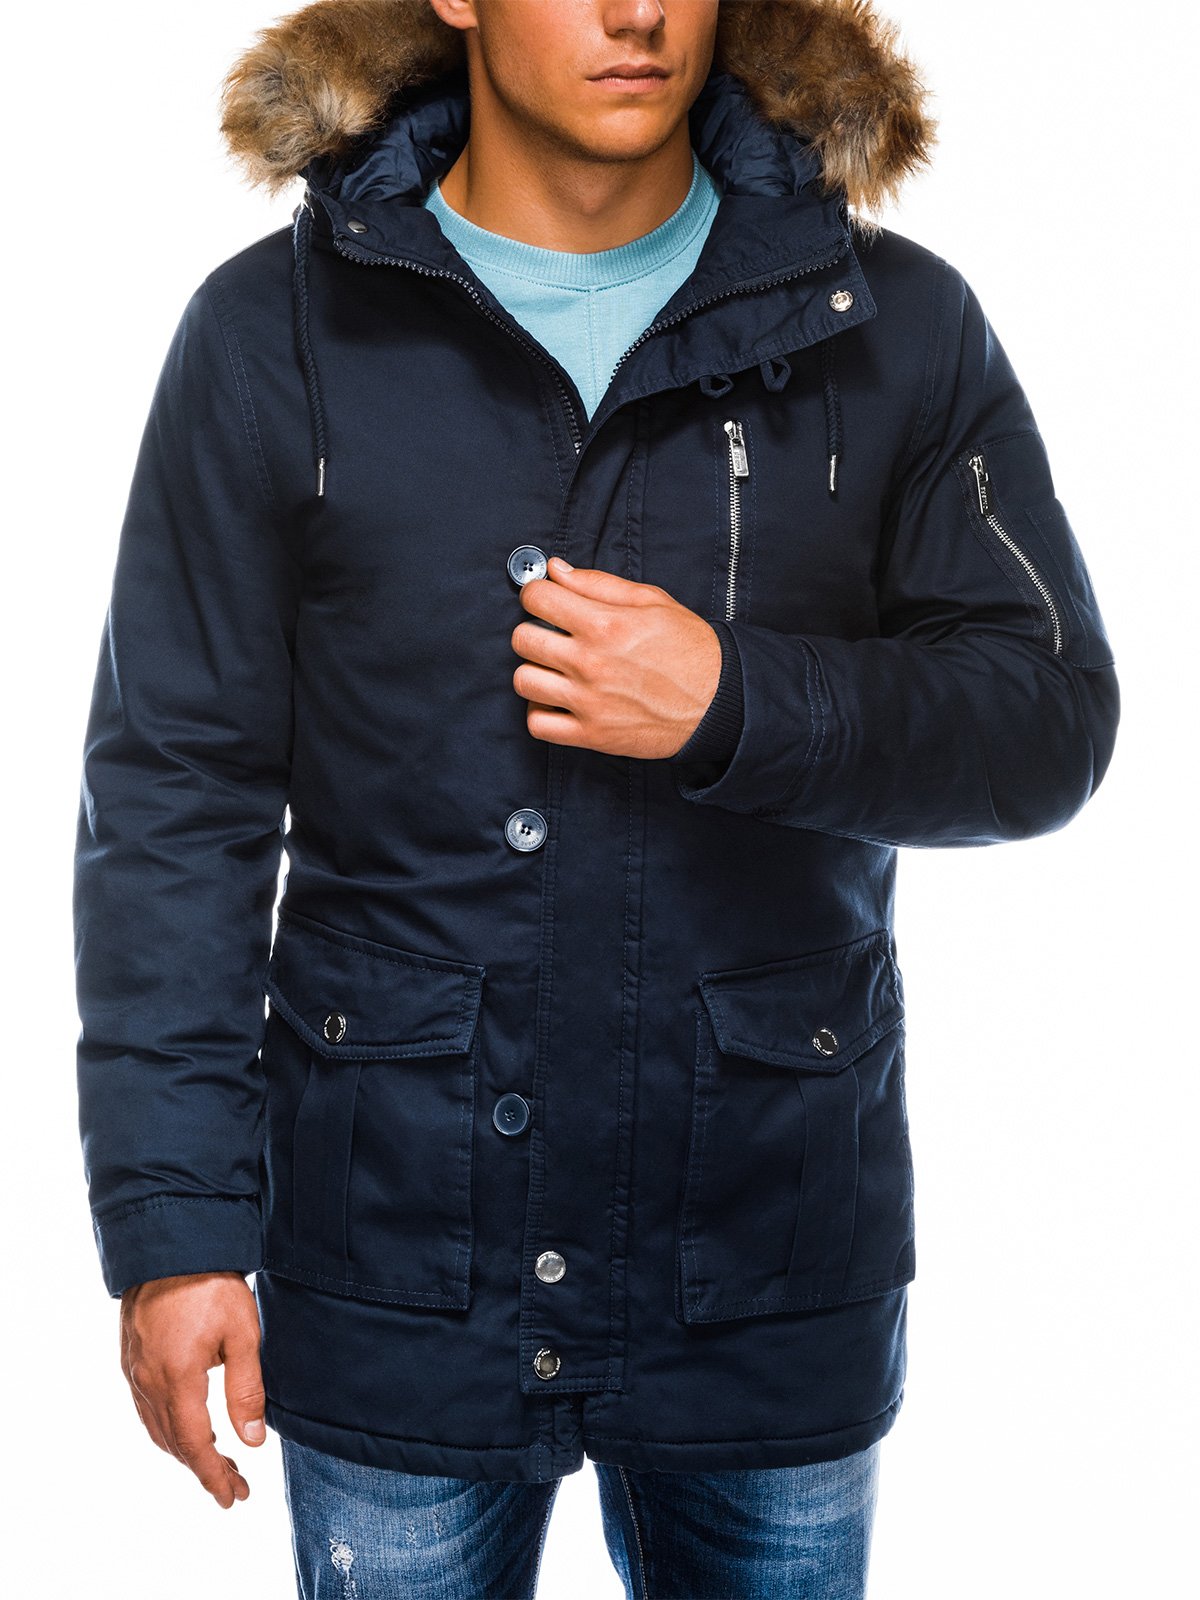 Men's winter parka jacket C365 - navy | MODONE wholesale - Clothing For Men